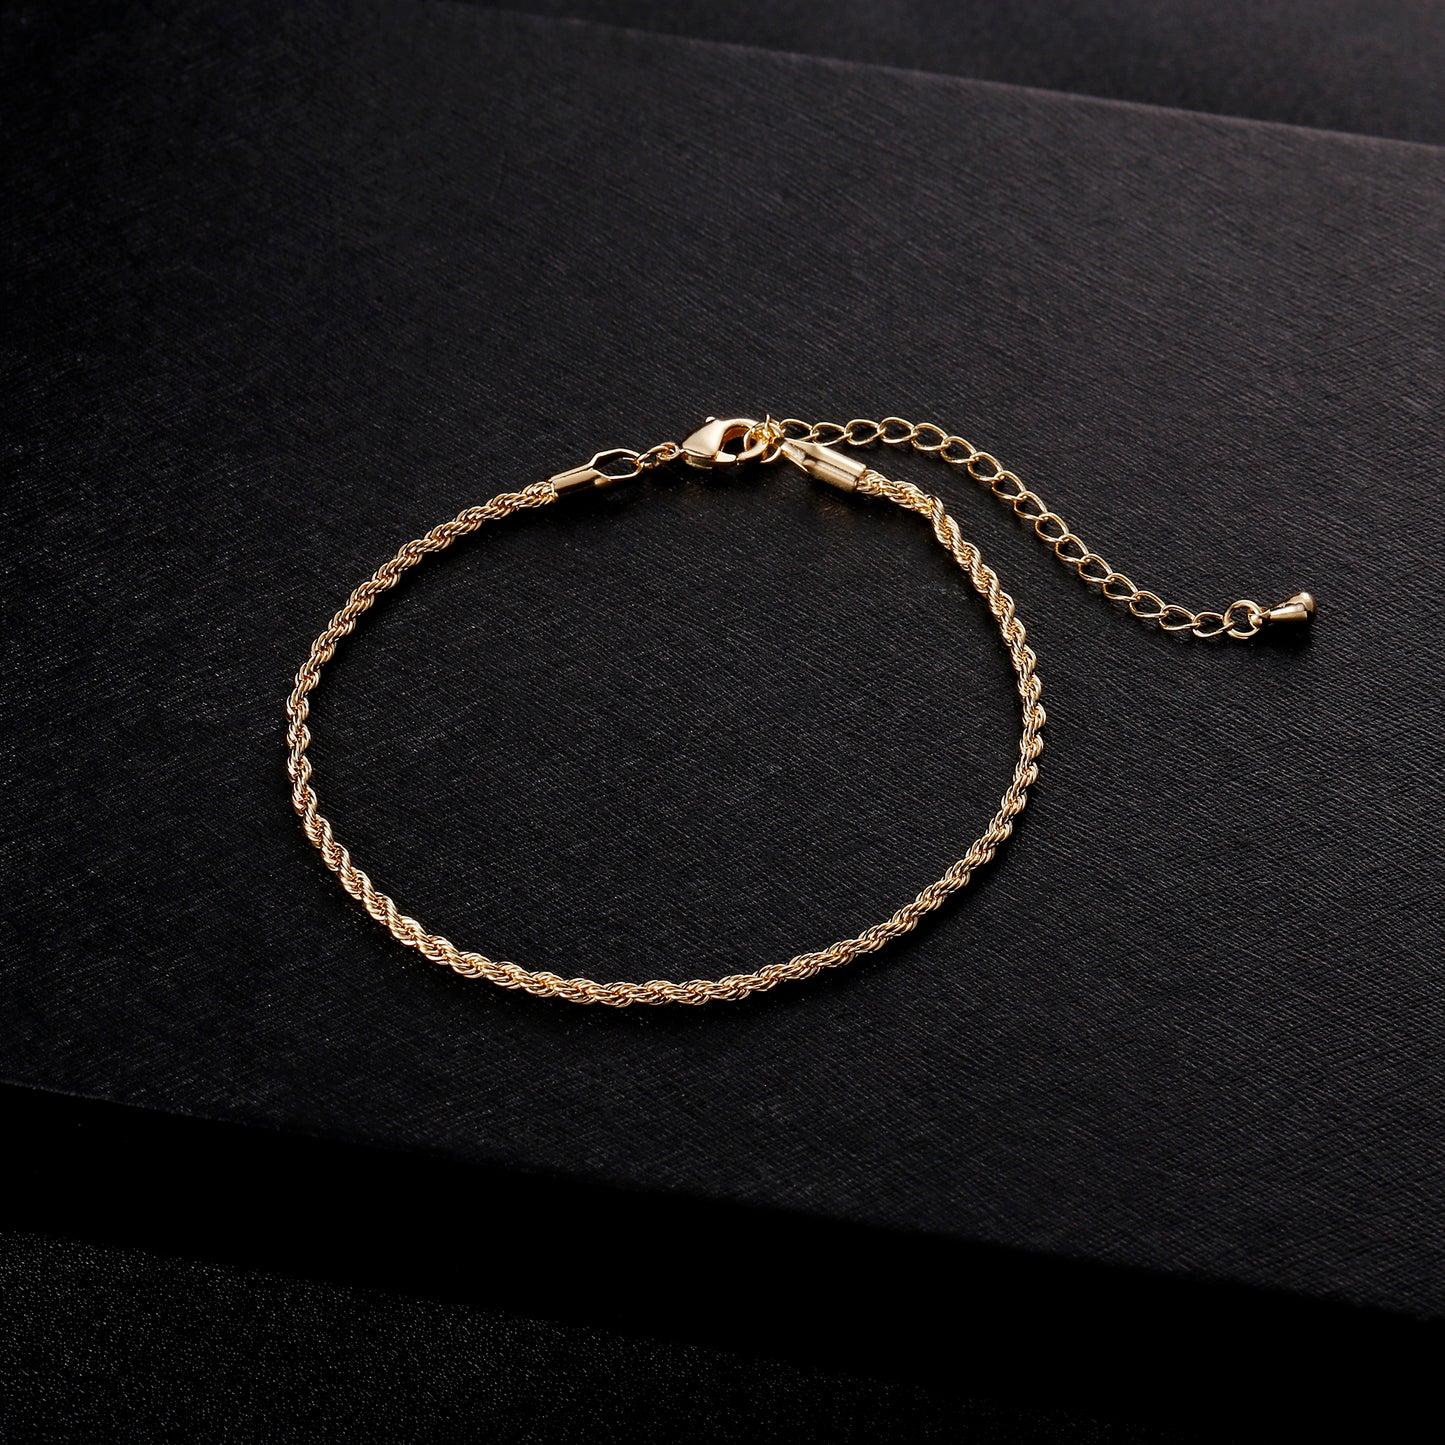 TASISO 14K Gold Plated Dainty Twist Rope Link Bracelet